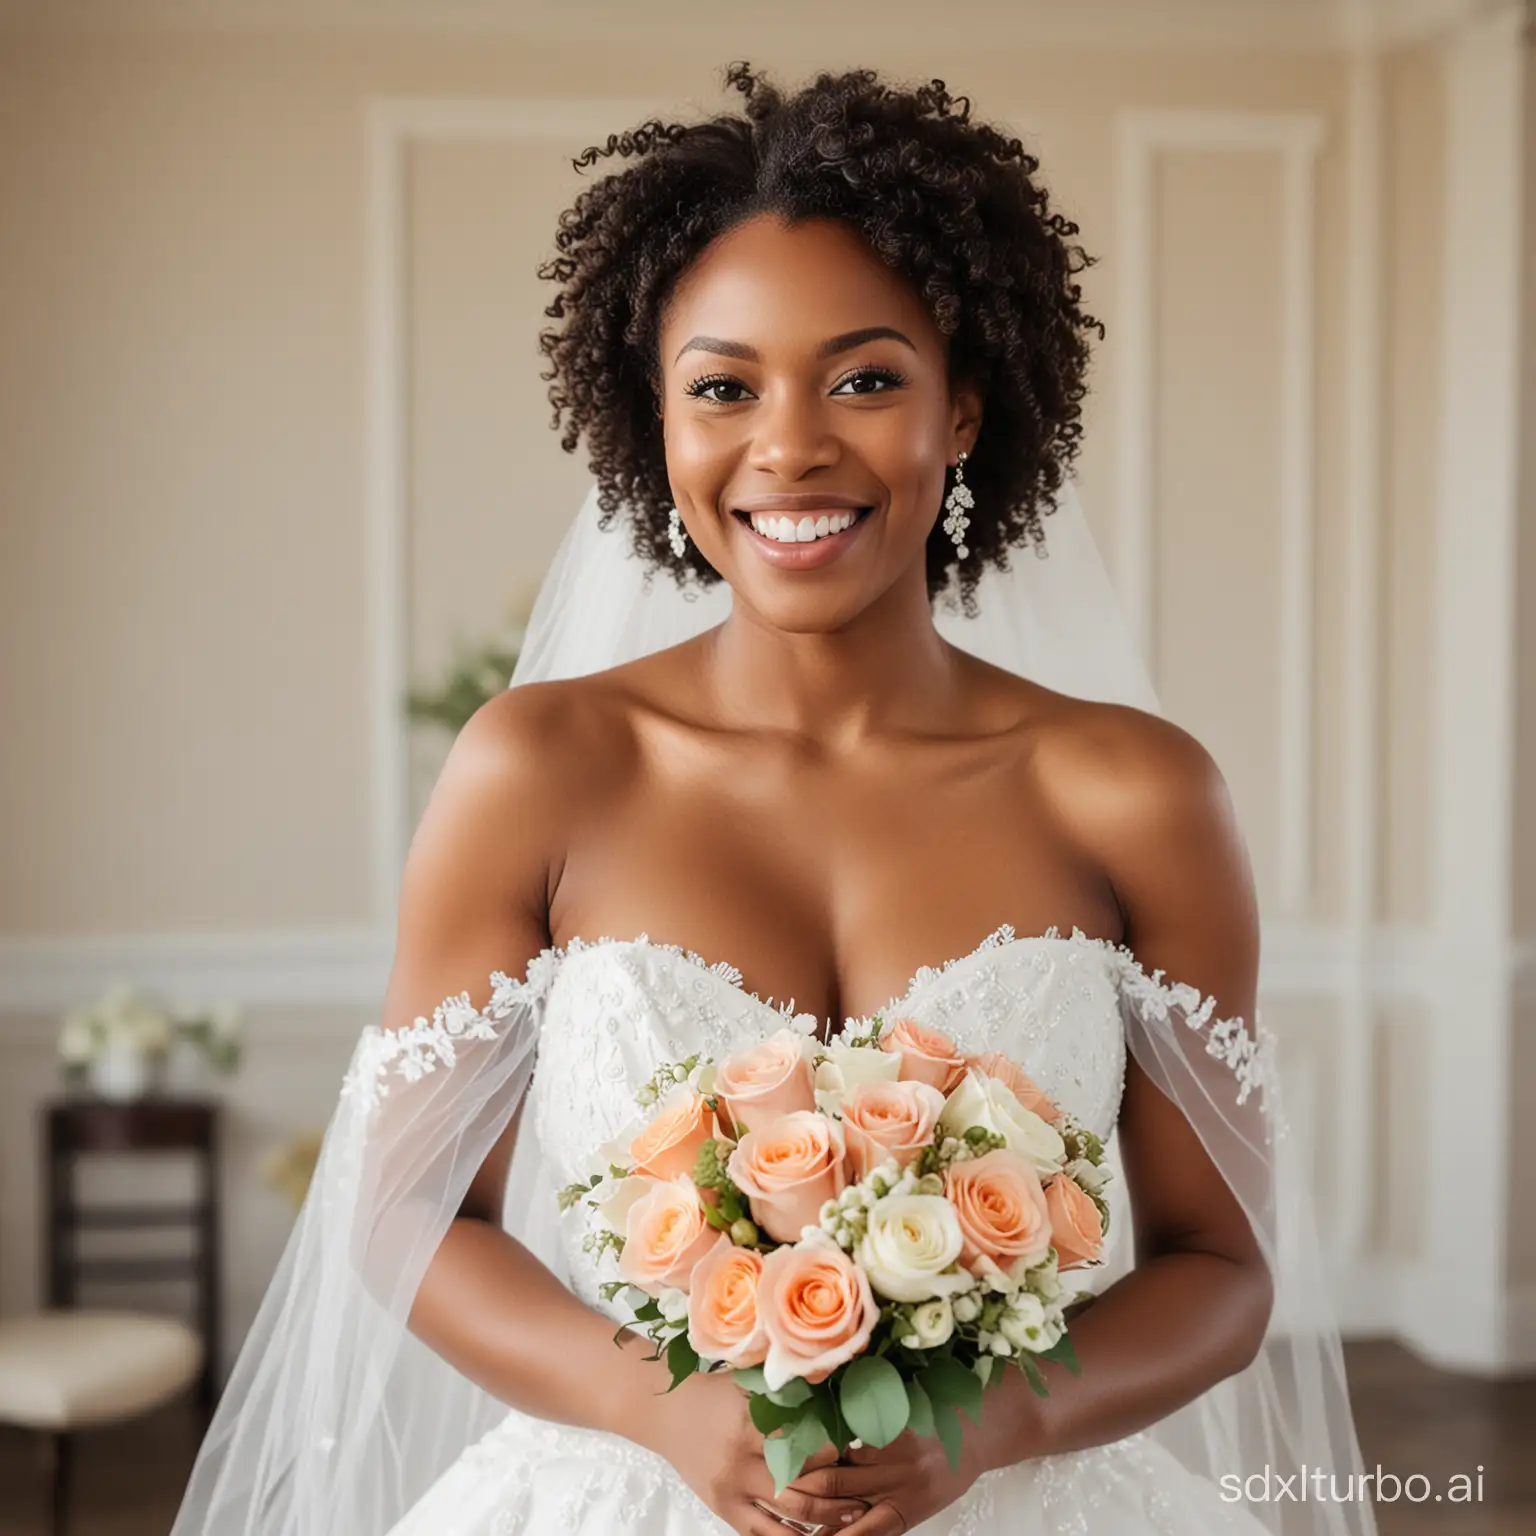 Joyful-Wedding-Reception-Smiling-Black-Bride-with-Bouquet